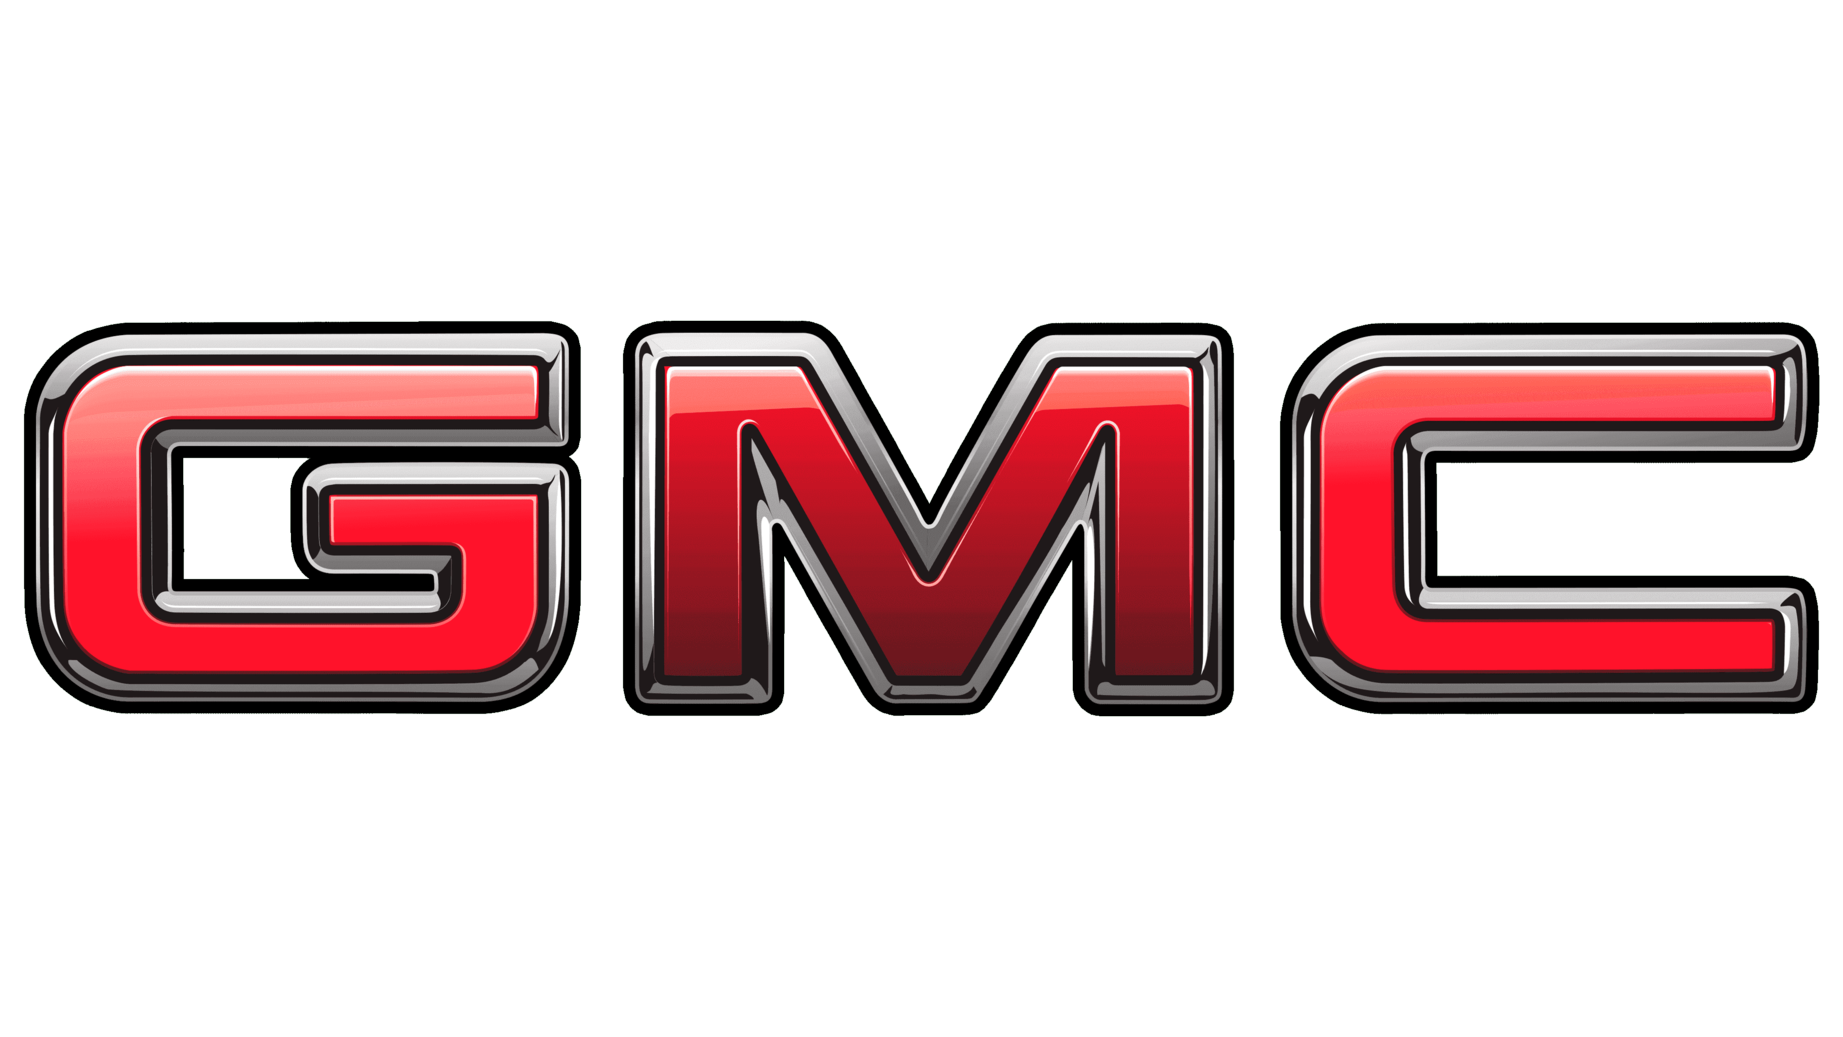 Gmc sign